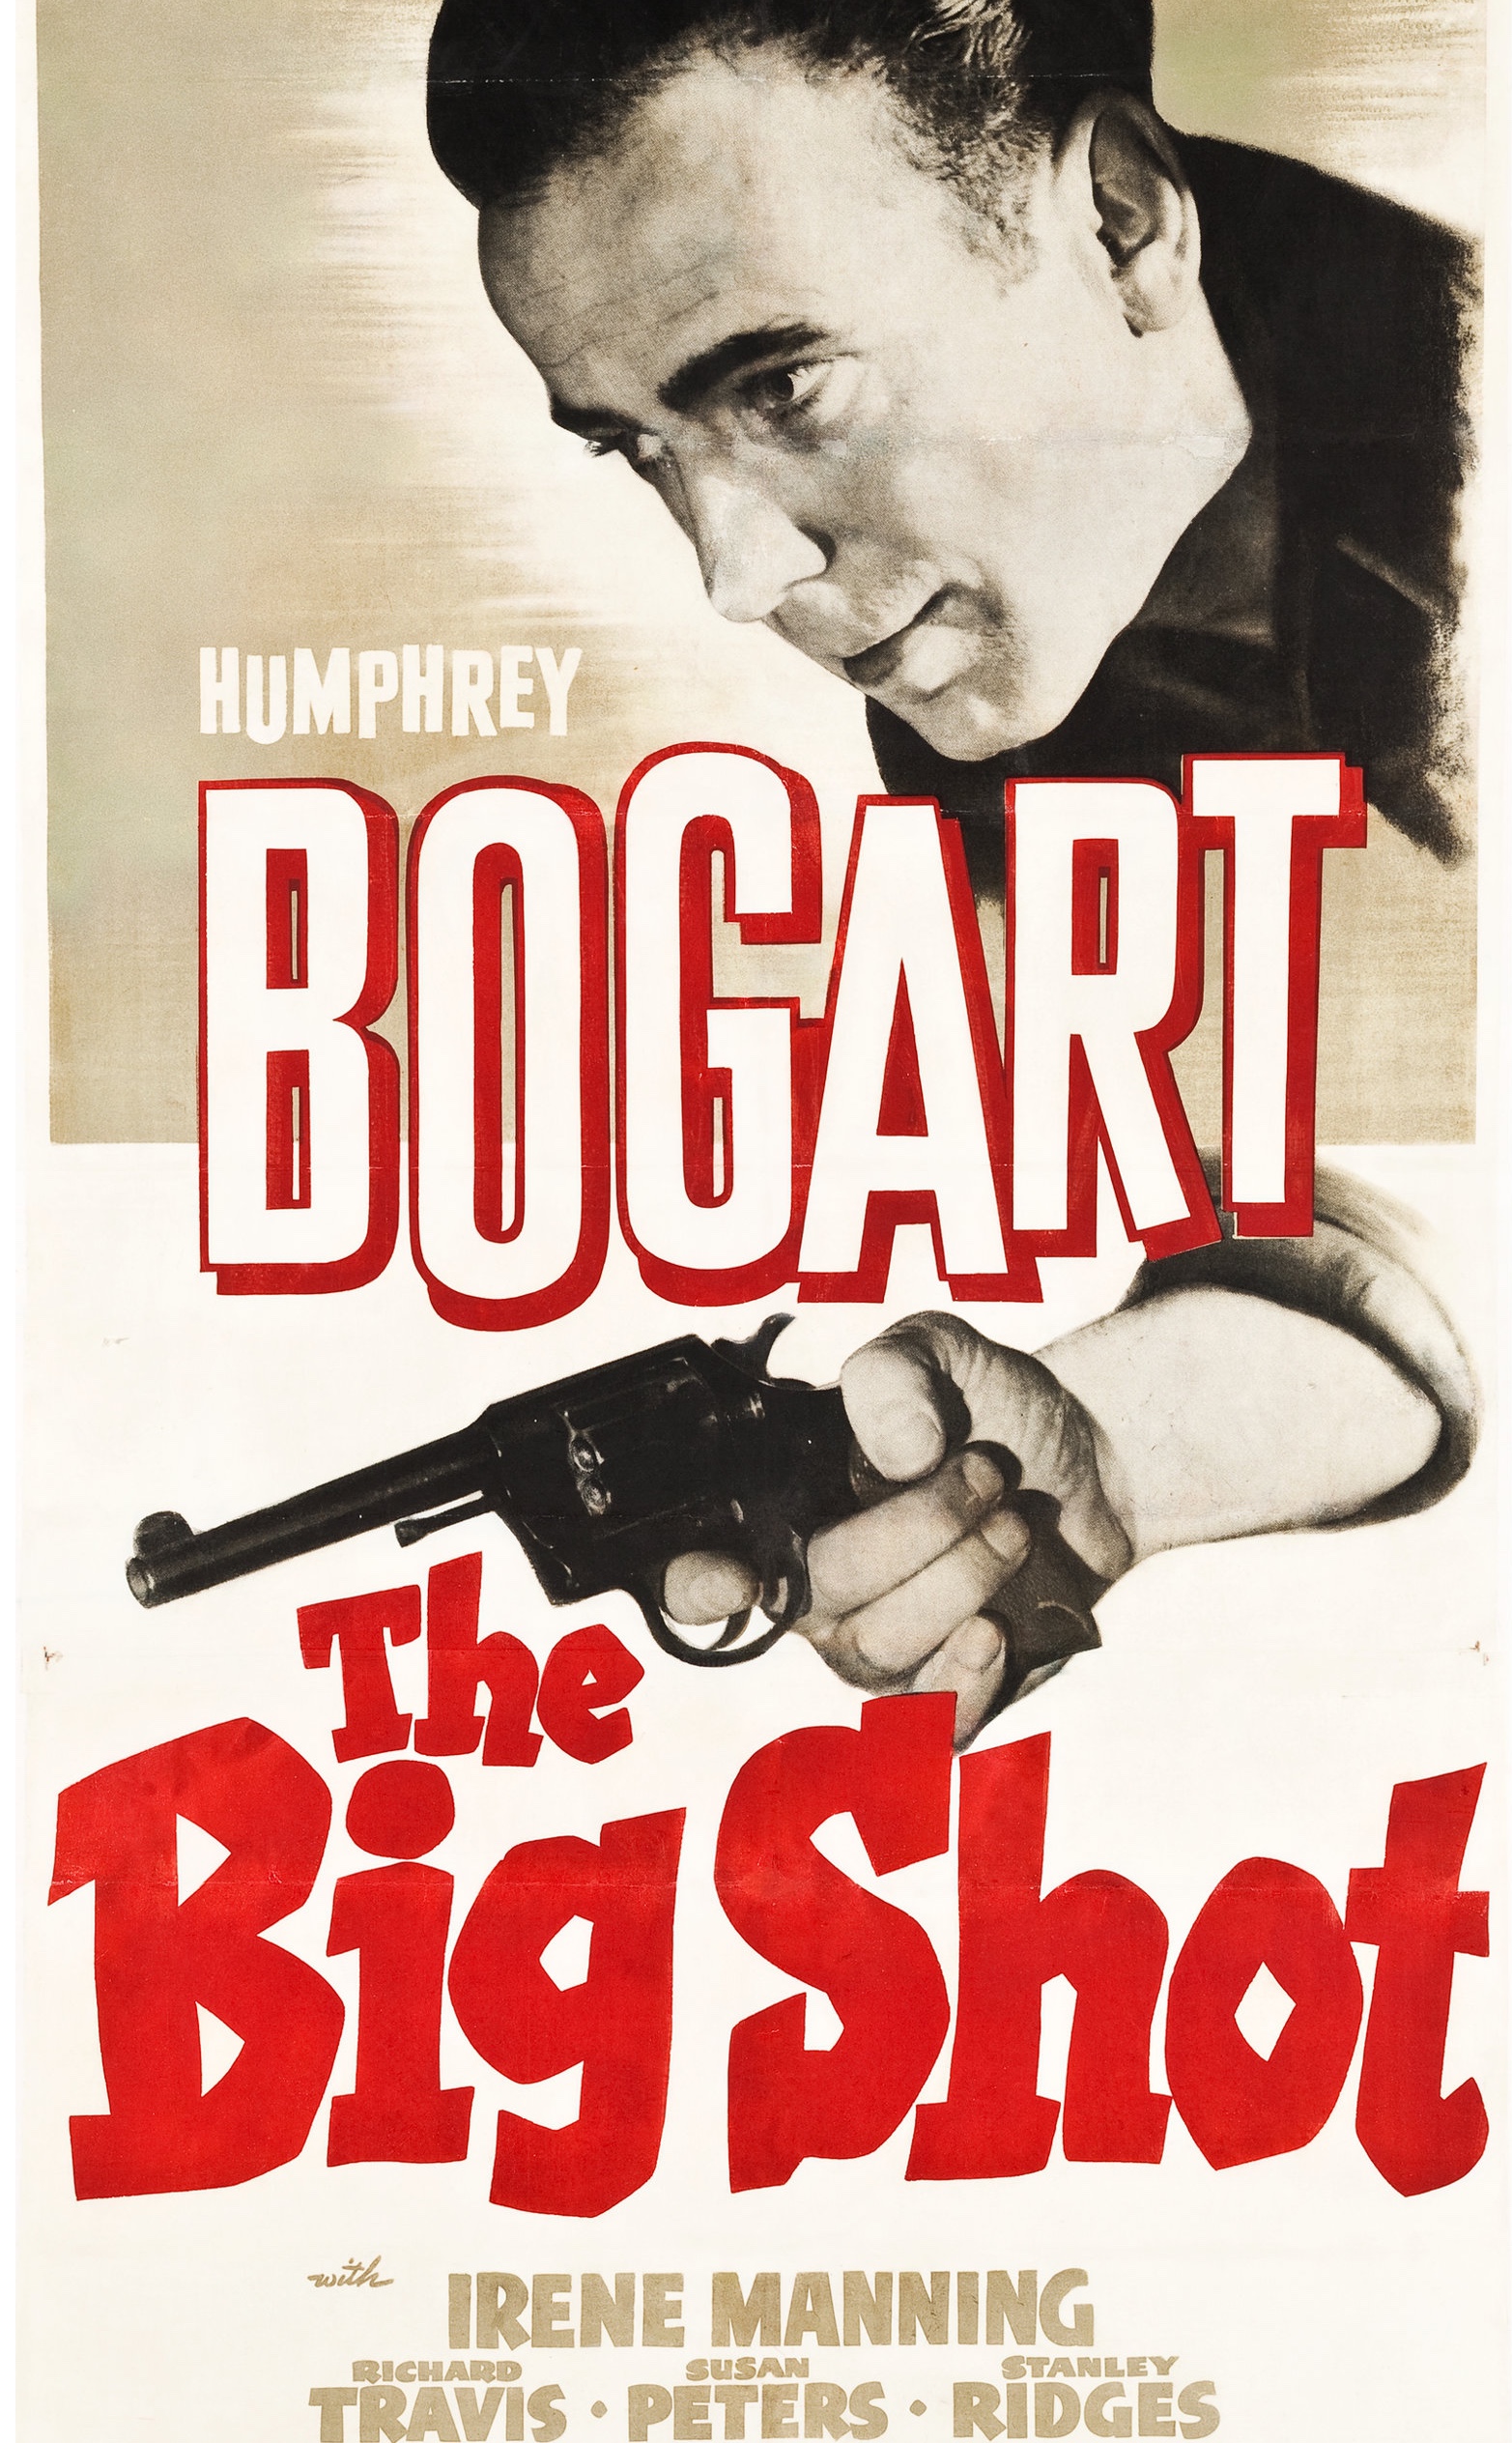 The Big Shot (1937 film) - Wikipedia